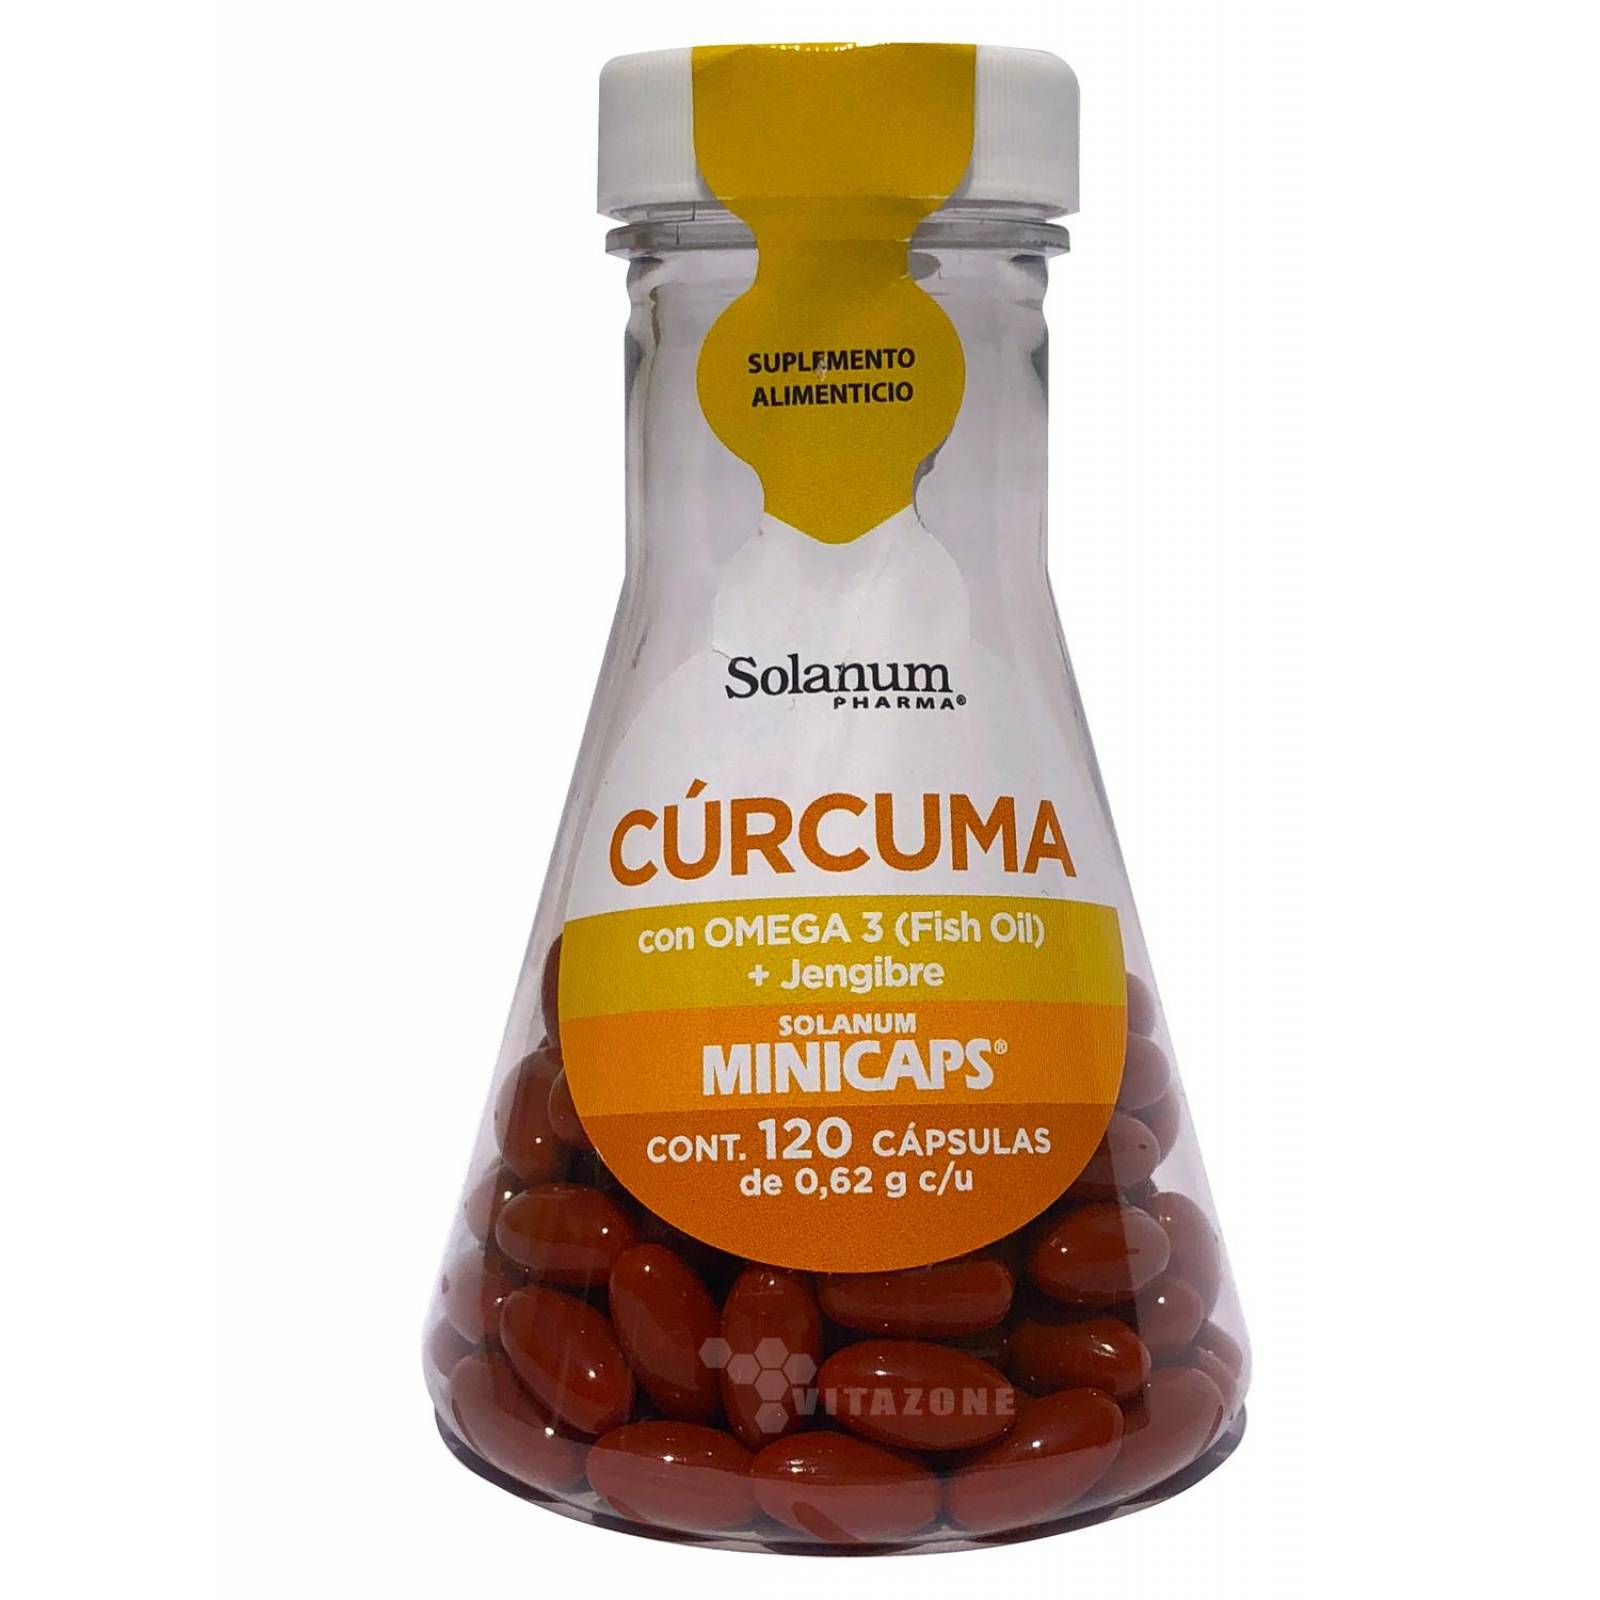 Cúrcuma Solanum 120 Minicaps Omega 3 y Jengibre 